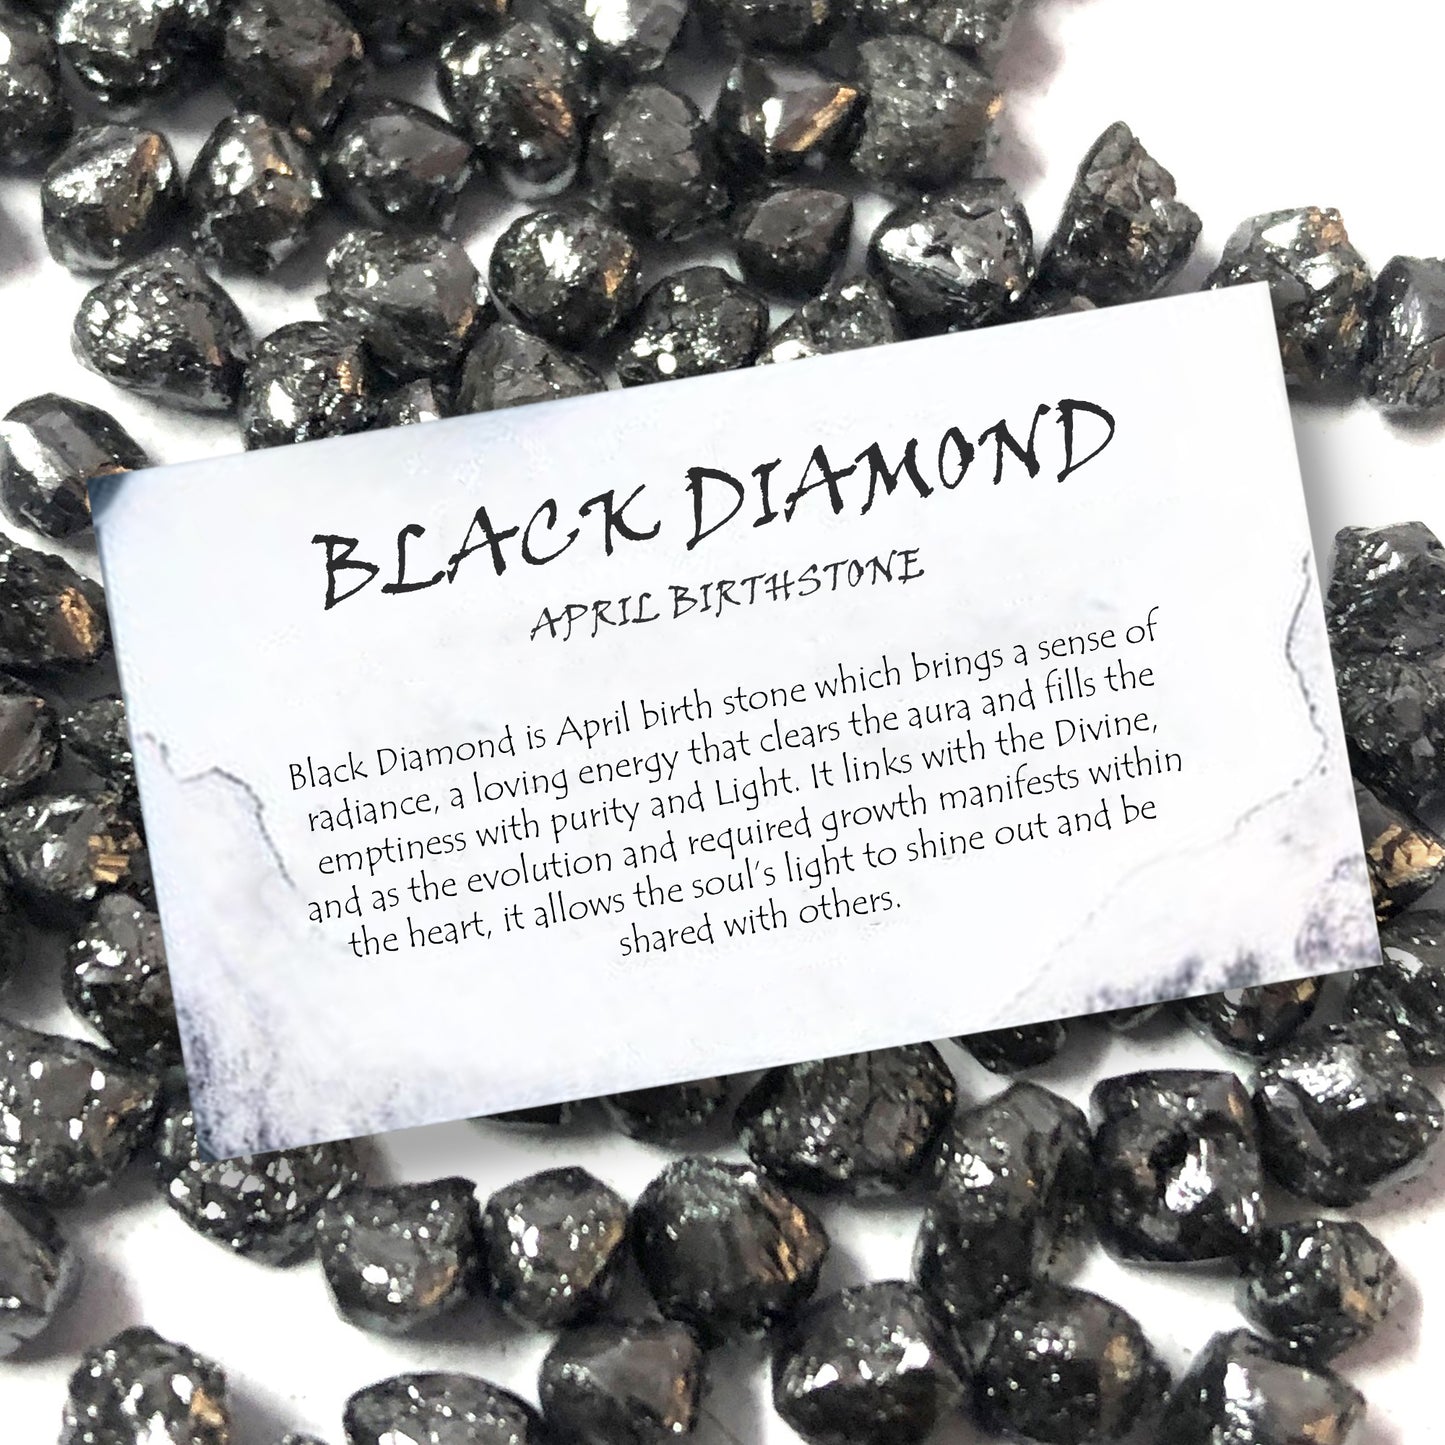 Solid 14k Gold Natural Black Diamond Pendant 0.23 Ct Round Gemstone Solitaire Pendant Handmade Jewelry For Women